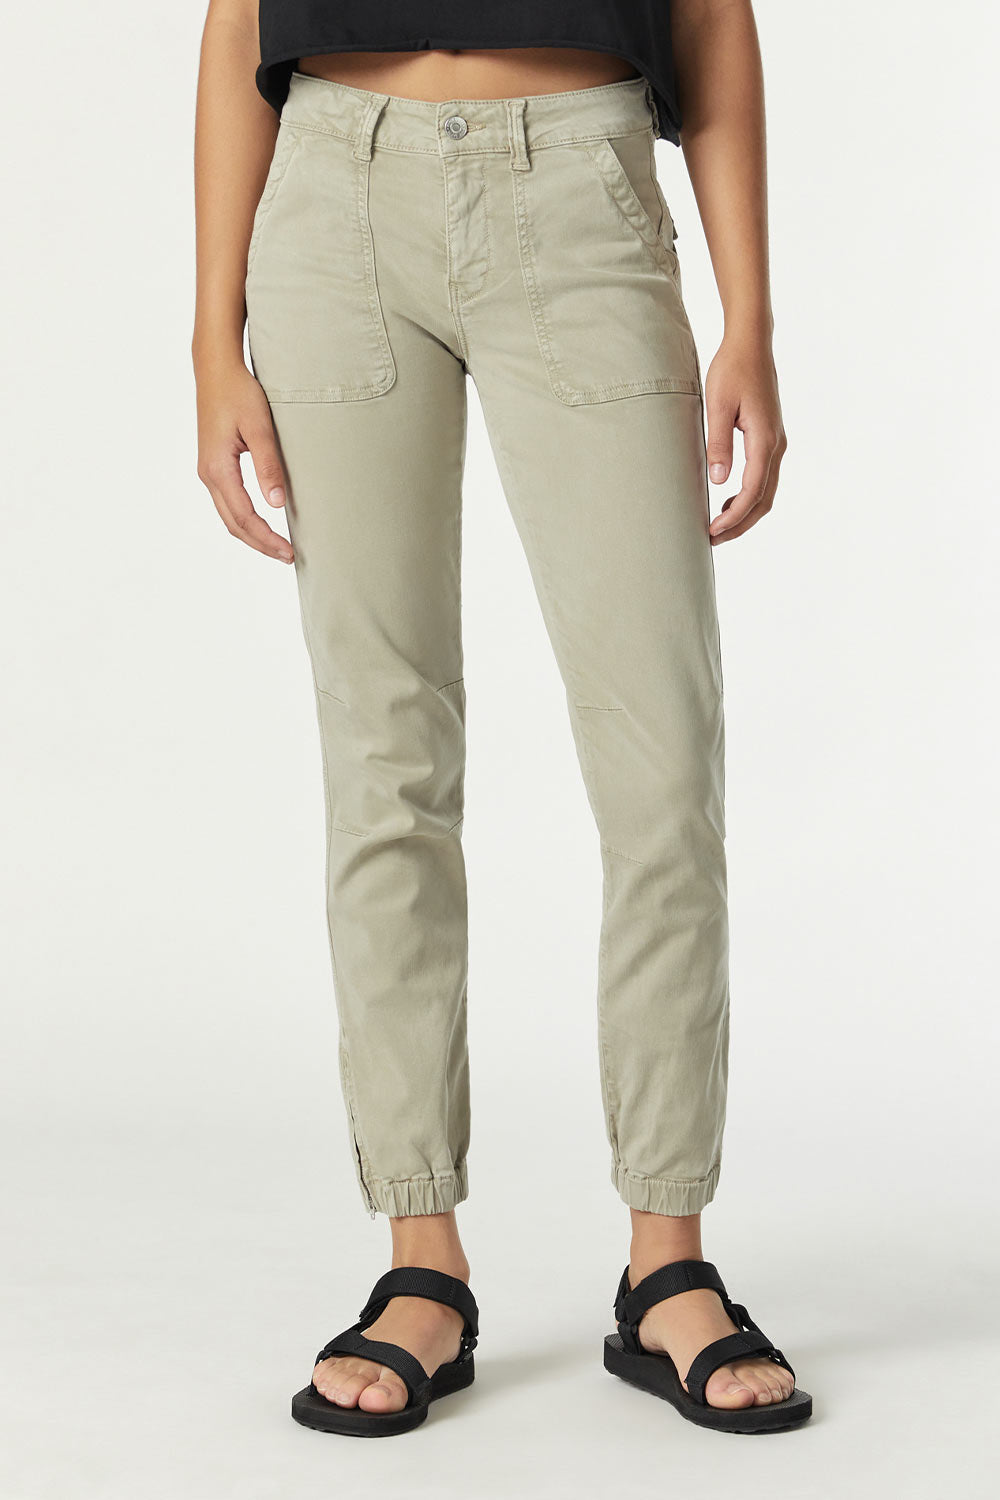 front view of Mavi Jeans (M100774-83341) Women's Ivy Slim Cargo Pants Abbey Stone Sateen TwillIvy Slim Cargo Pants Abbey Stone Sateen Twill with Pockets